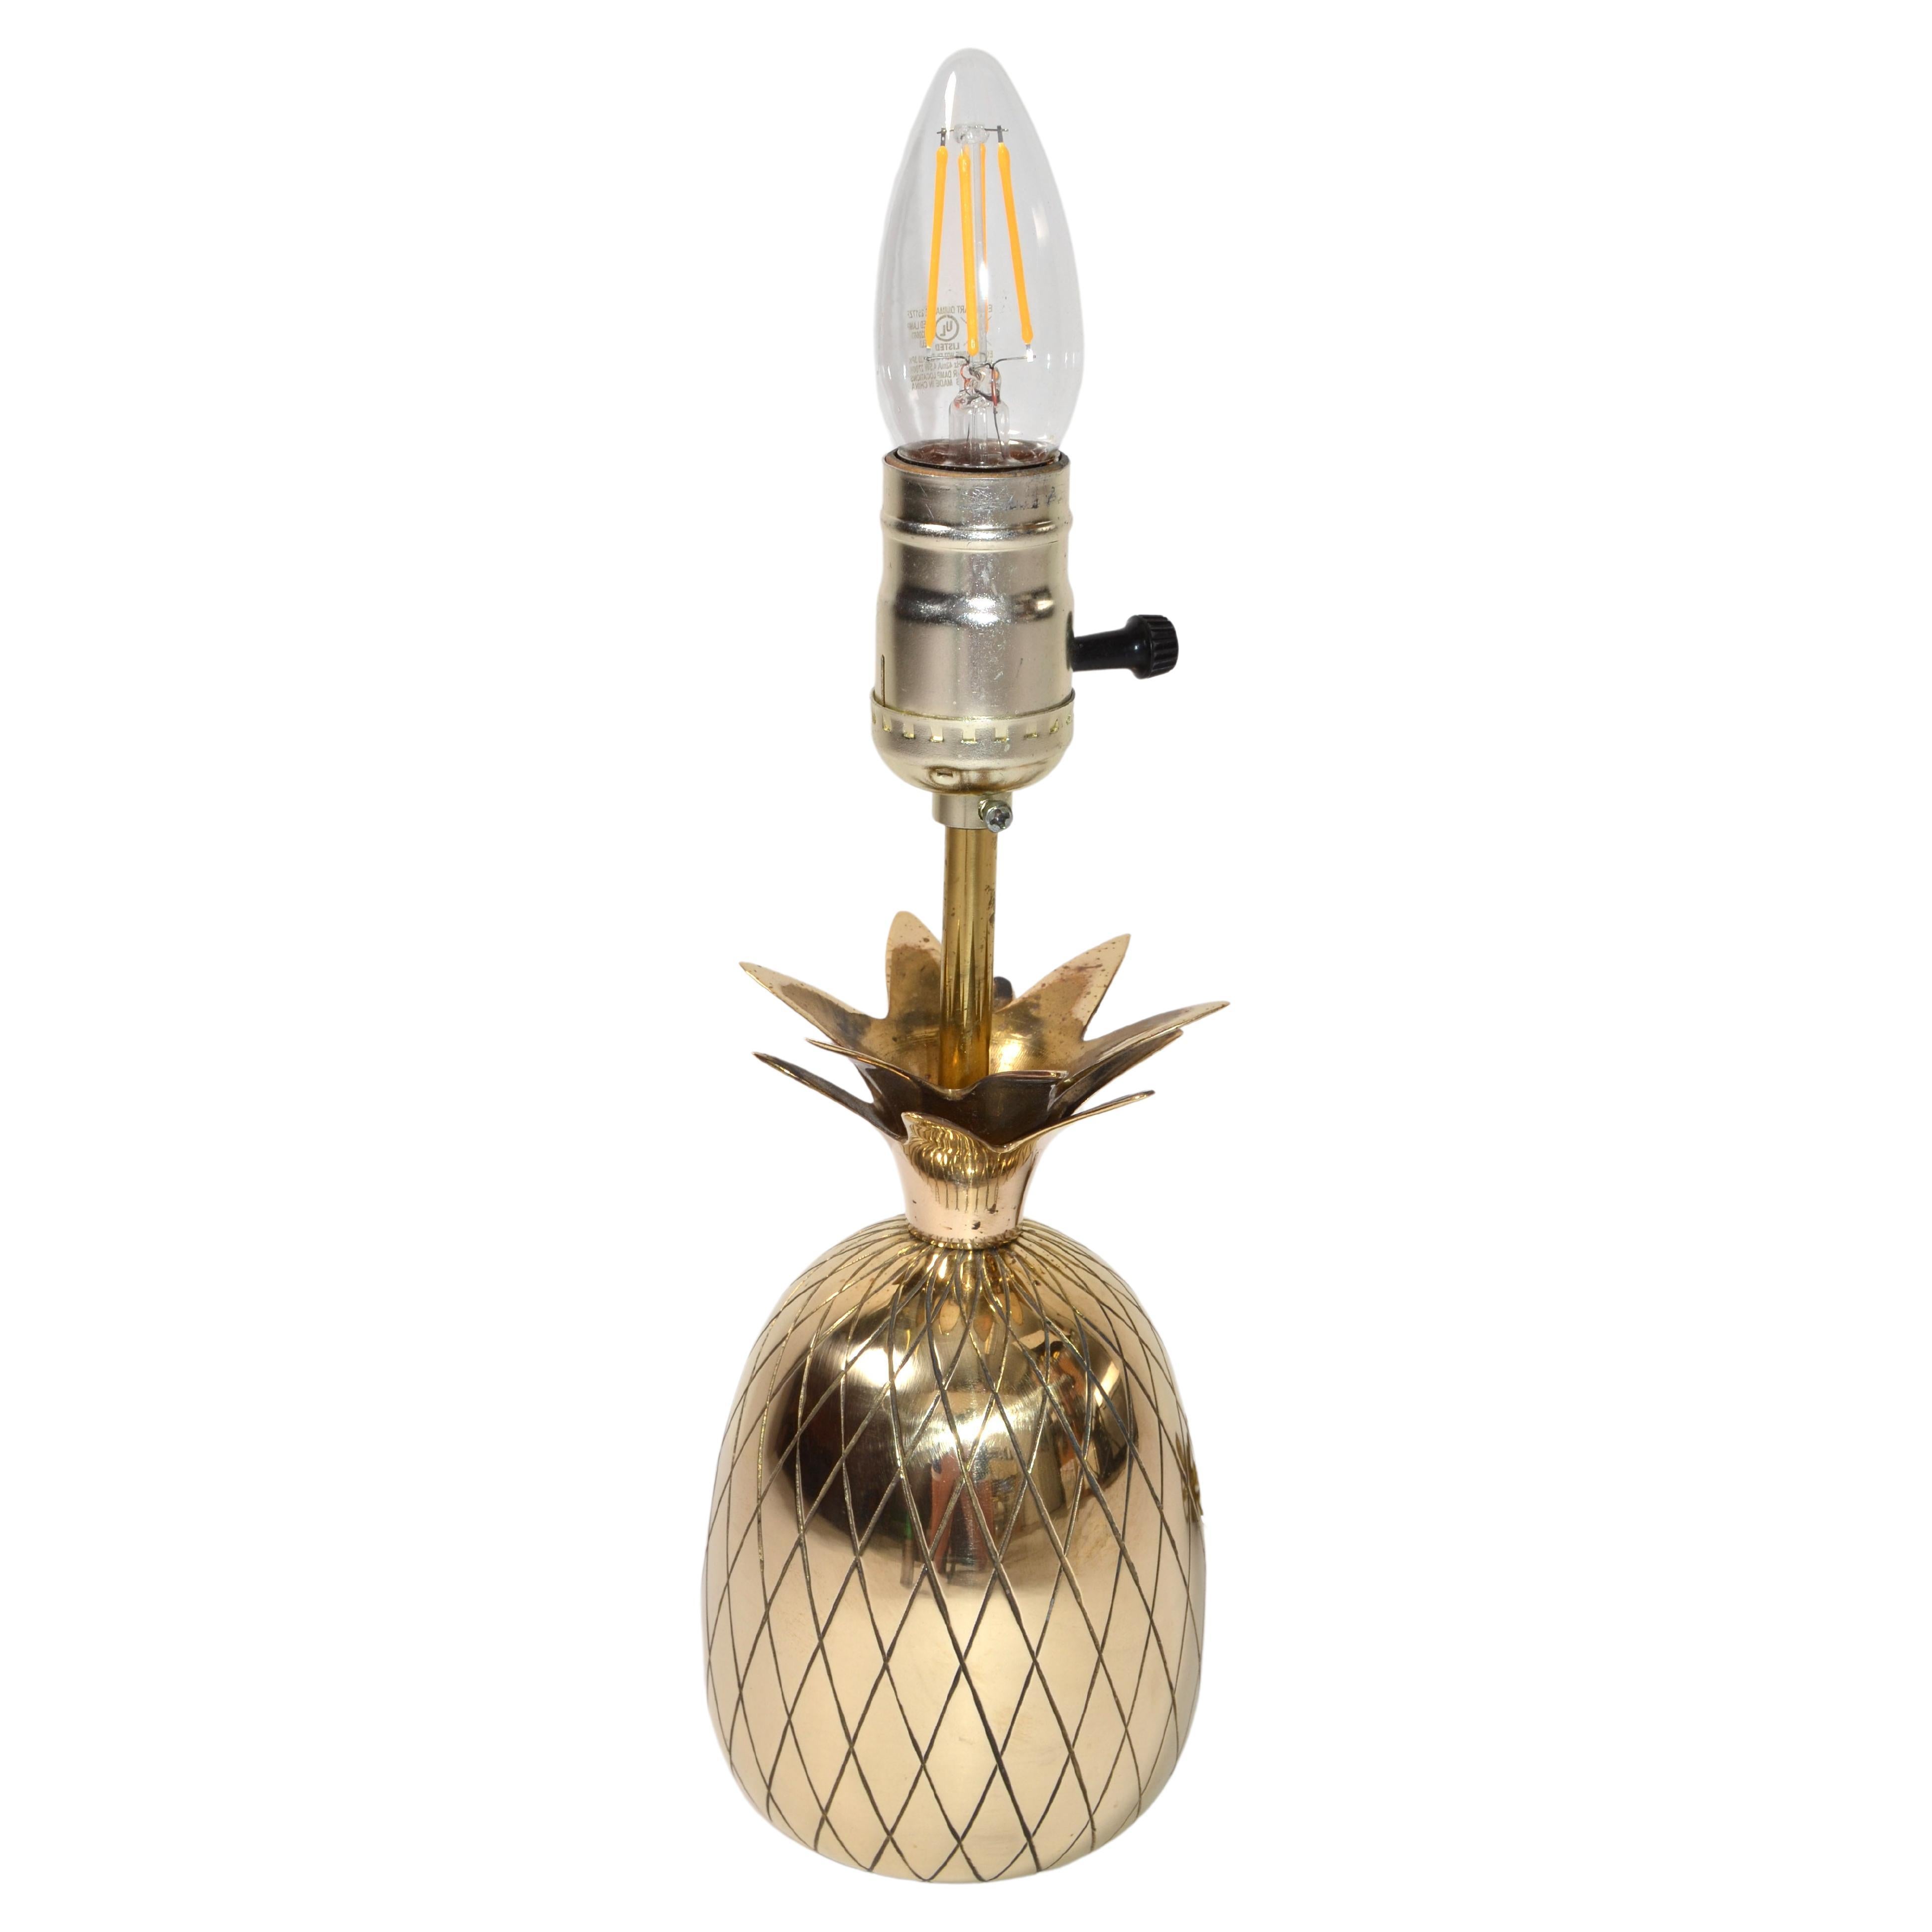 Lampe de chevet sculpturale en forme d'ananas en bronze poli de style Hollywood Regency